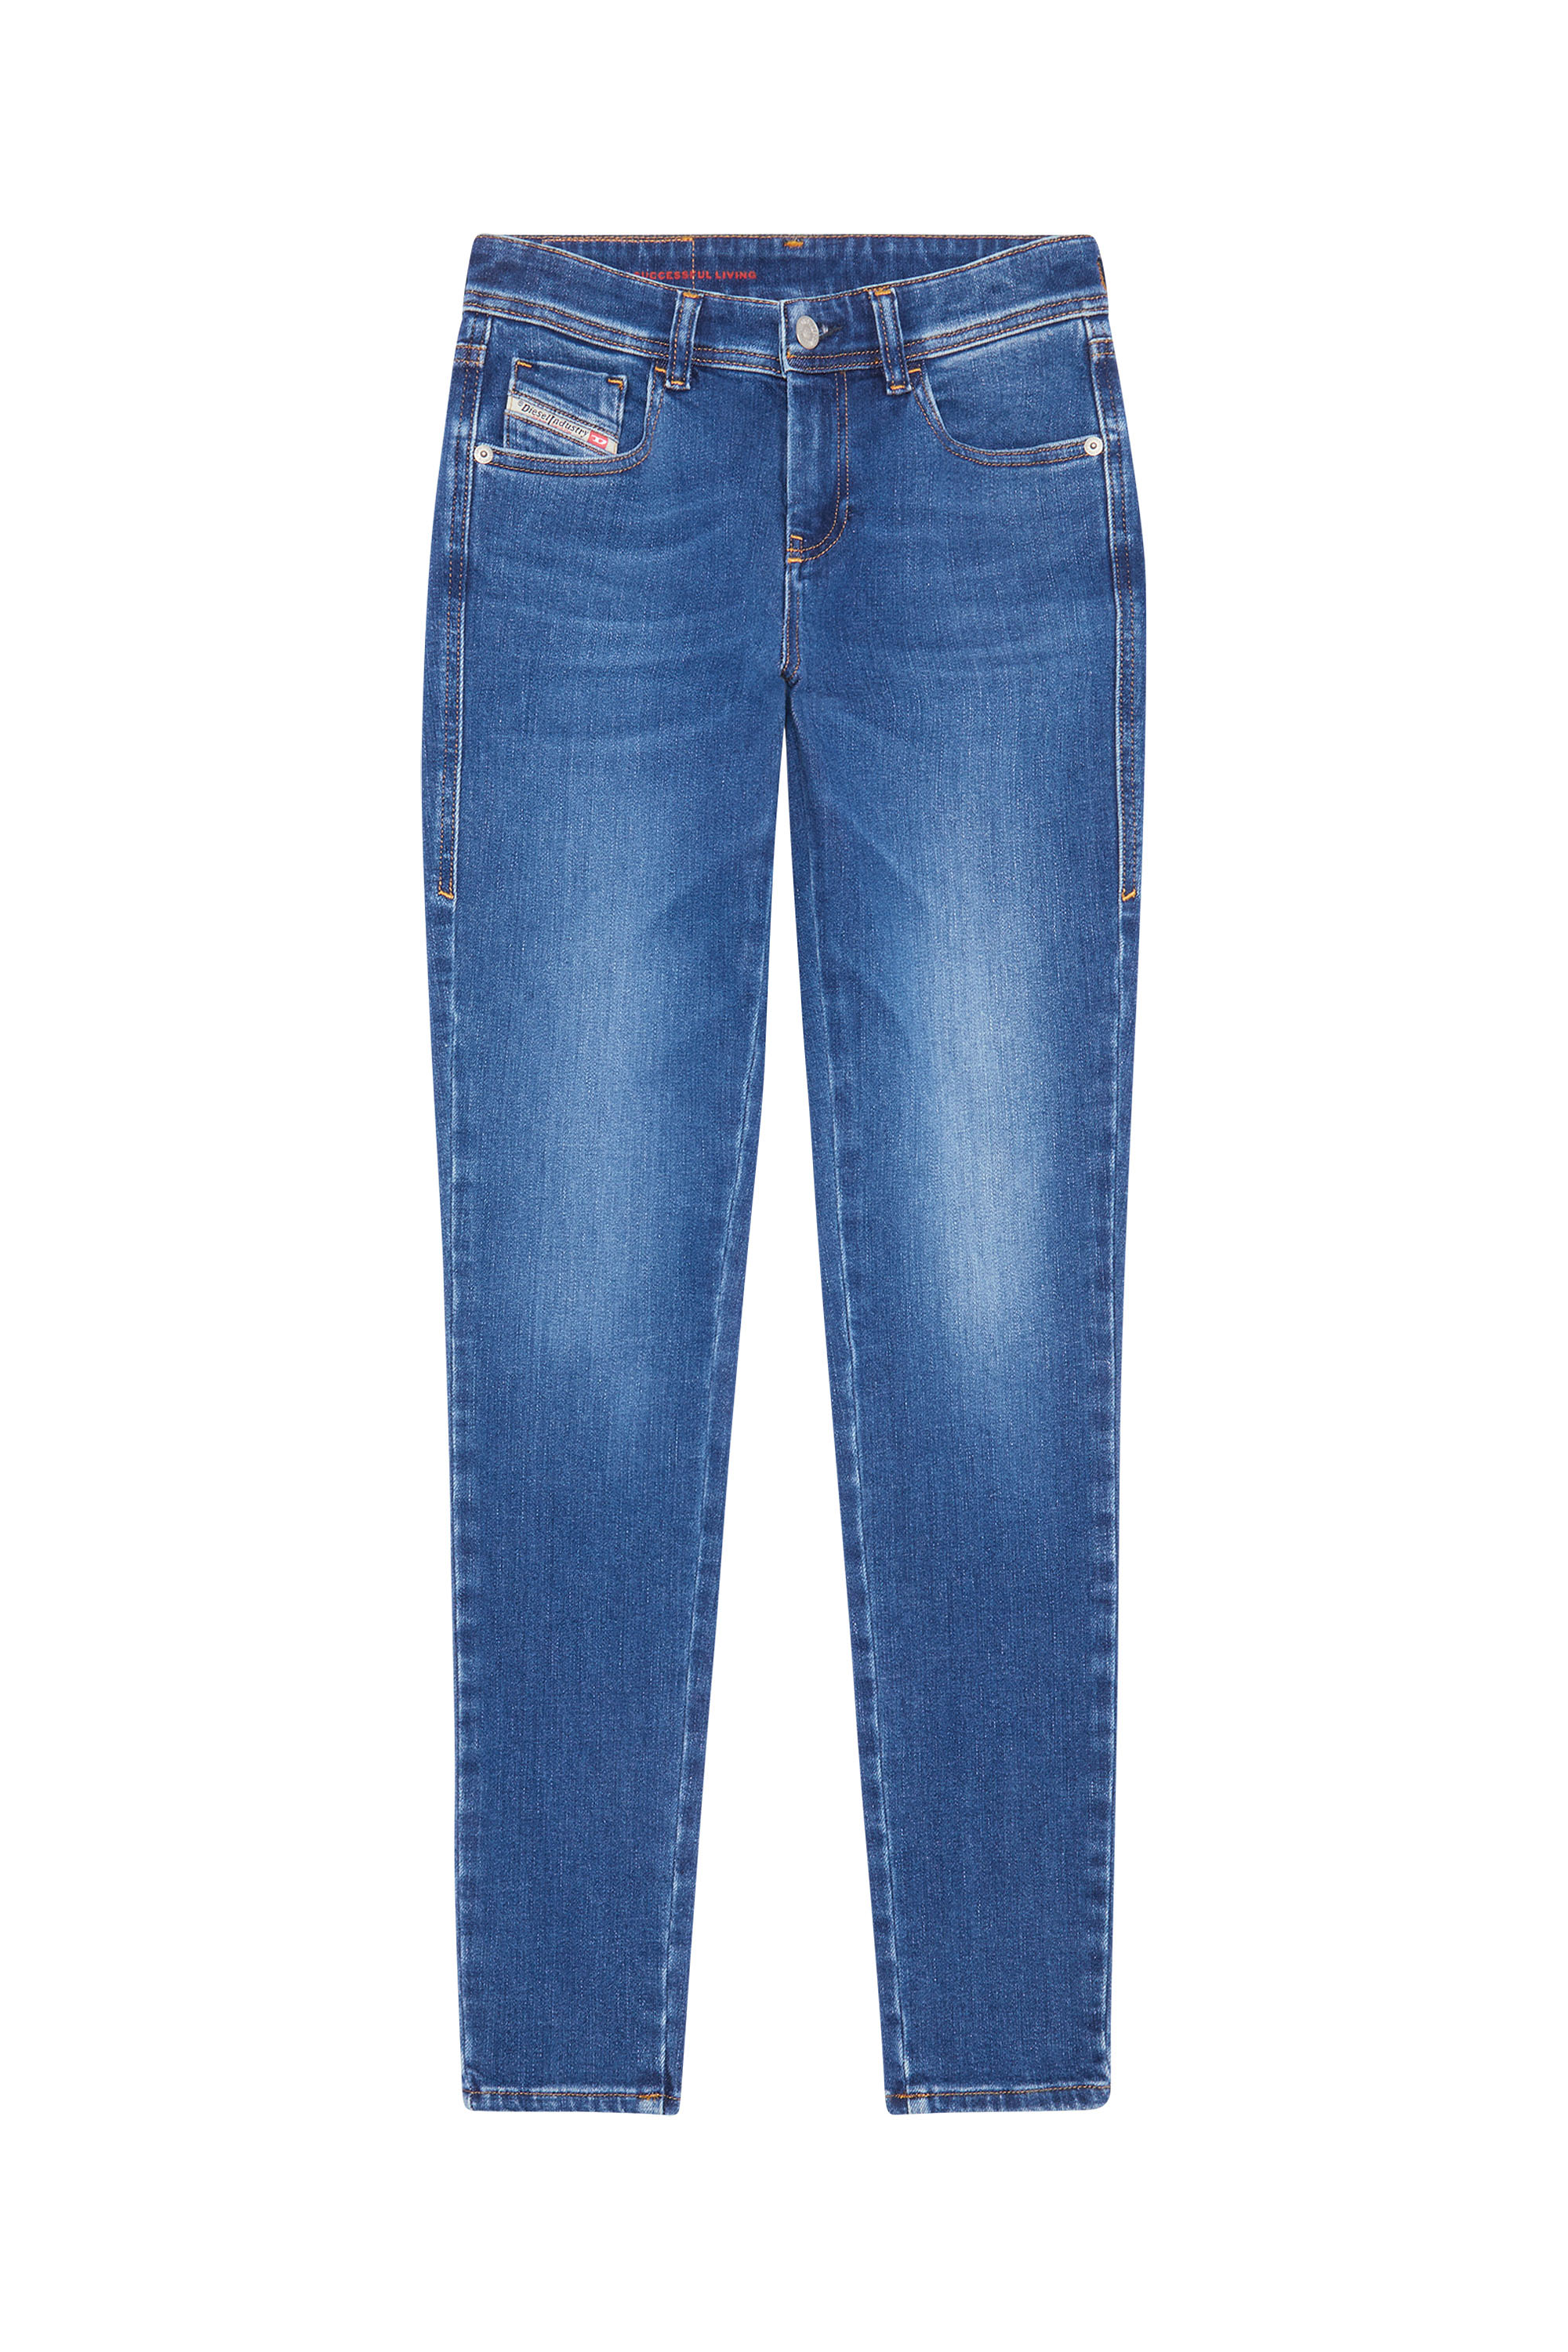 2017 SLANDY 09C21 Super skinny Jeans, Bleu moyen - Jeans